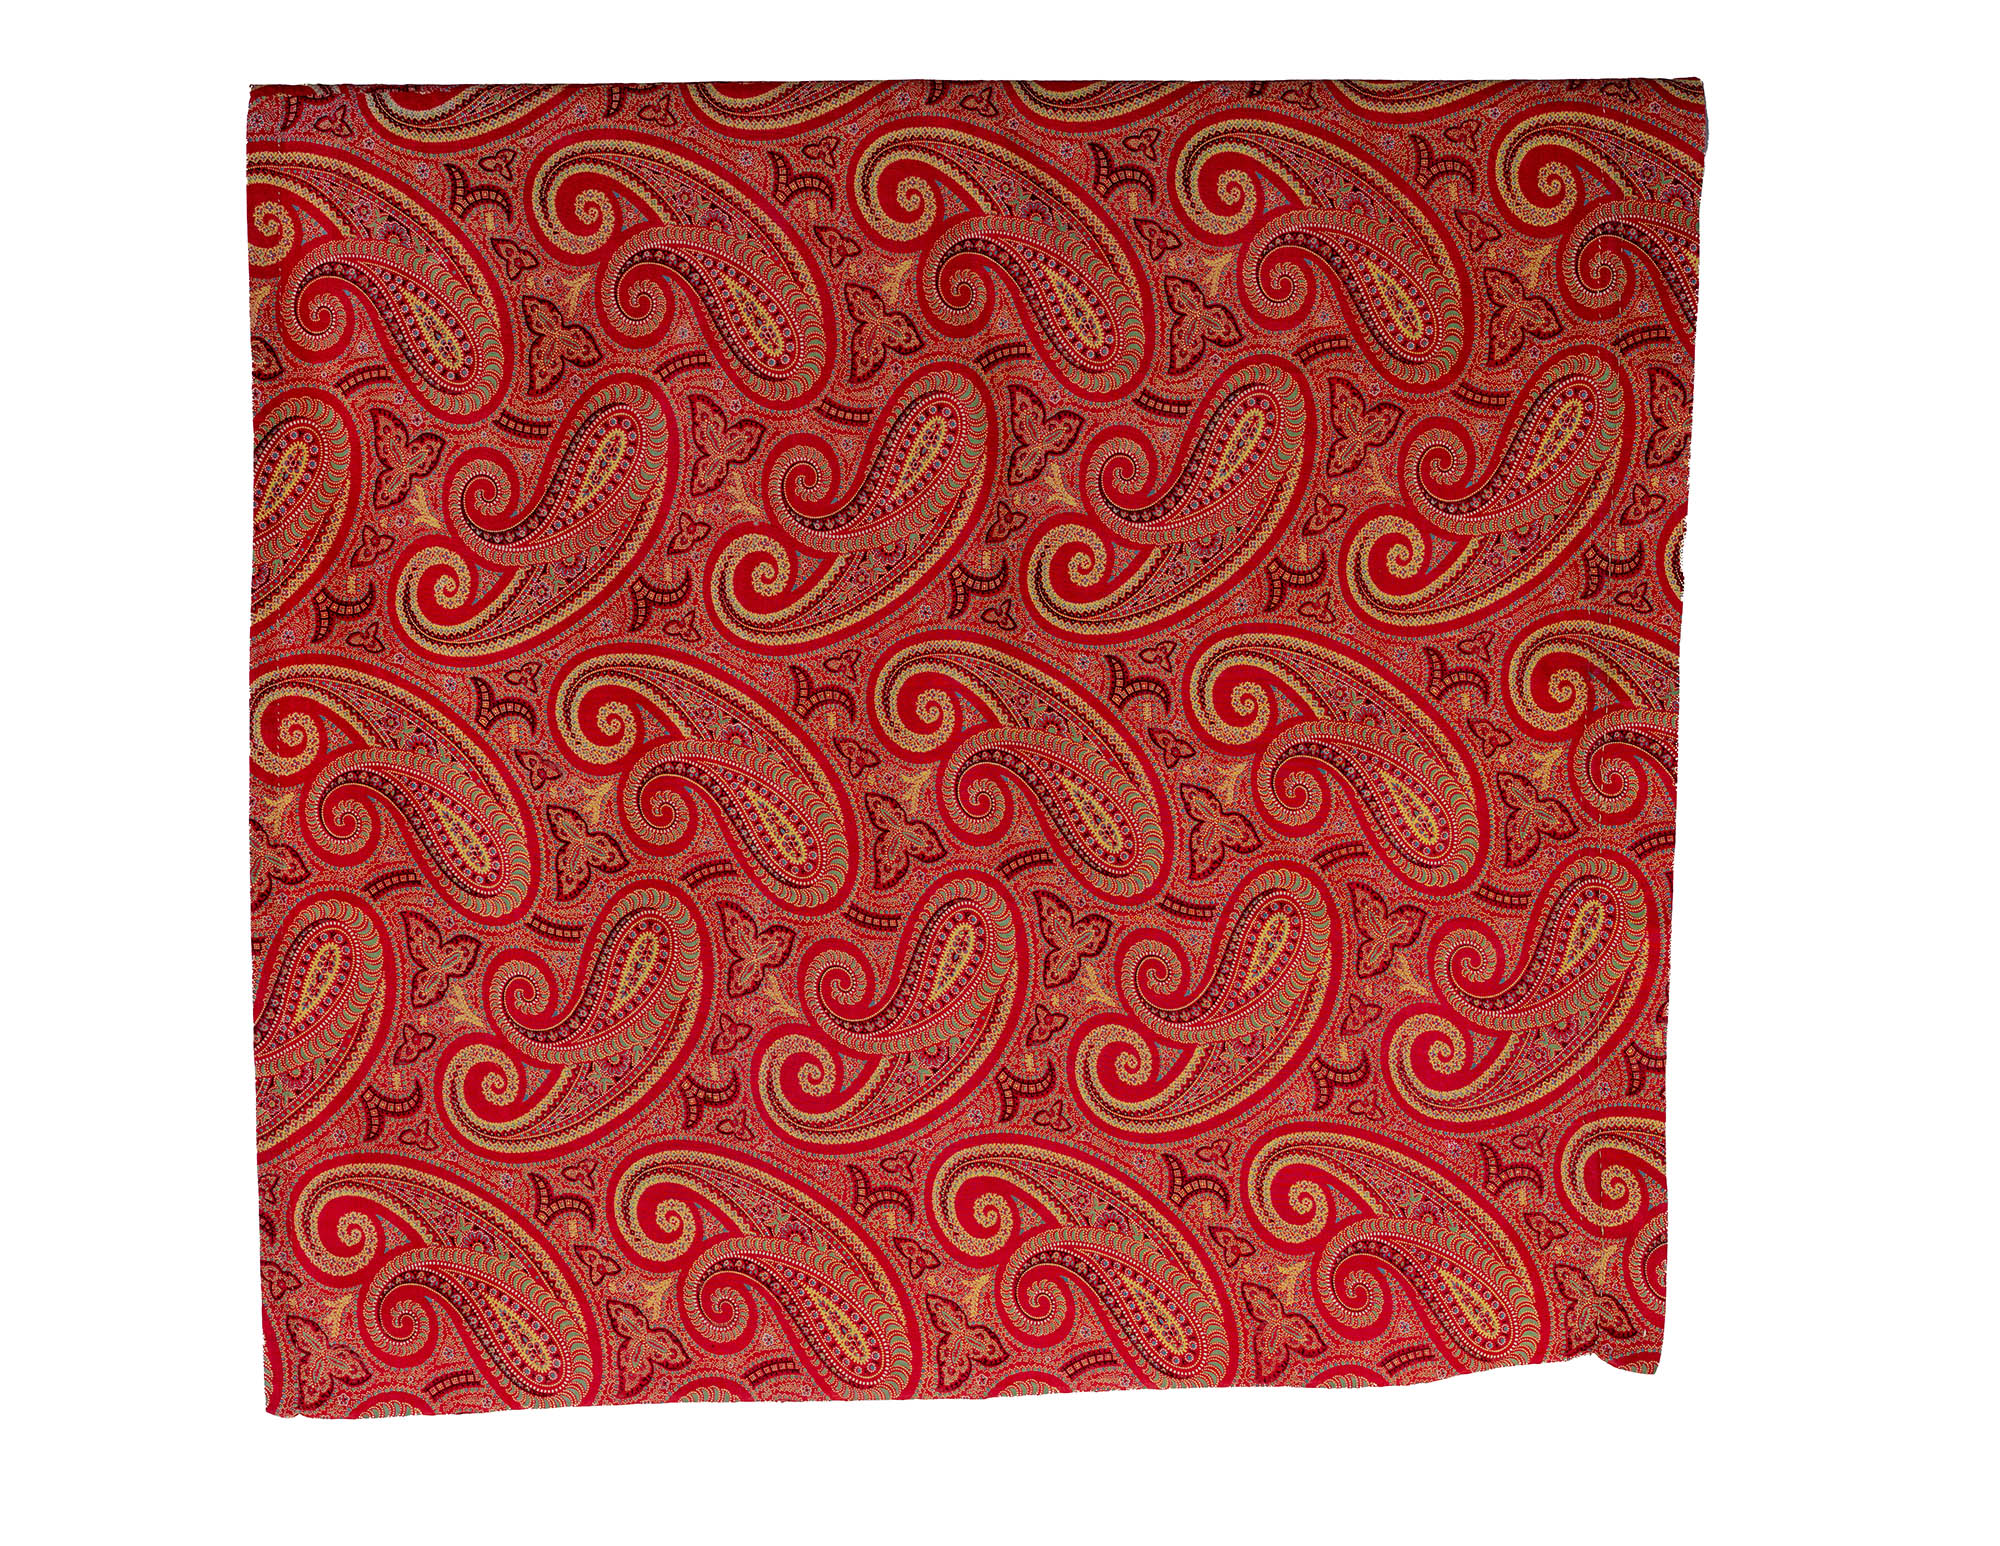 3B-6669-Turkey-red-printed-fabric-sample